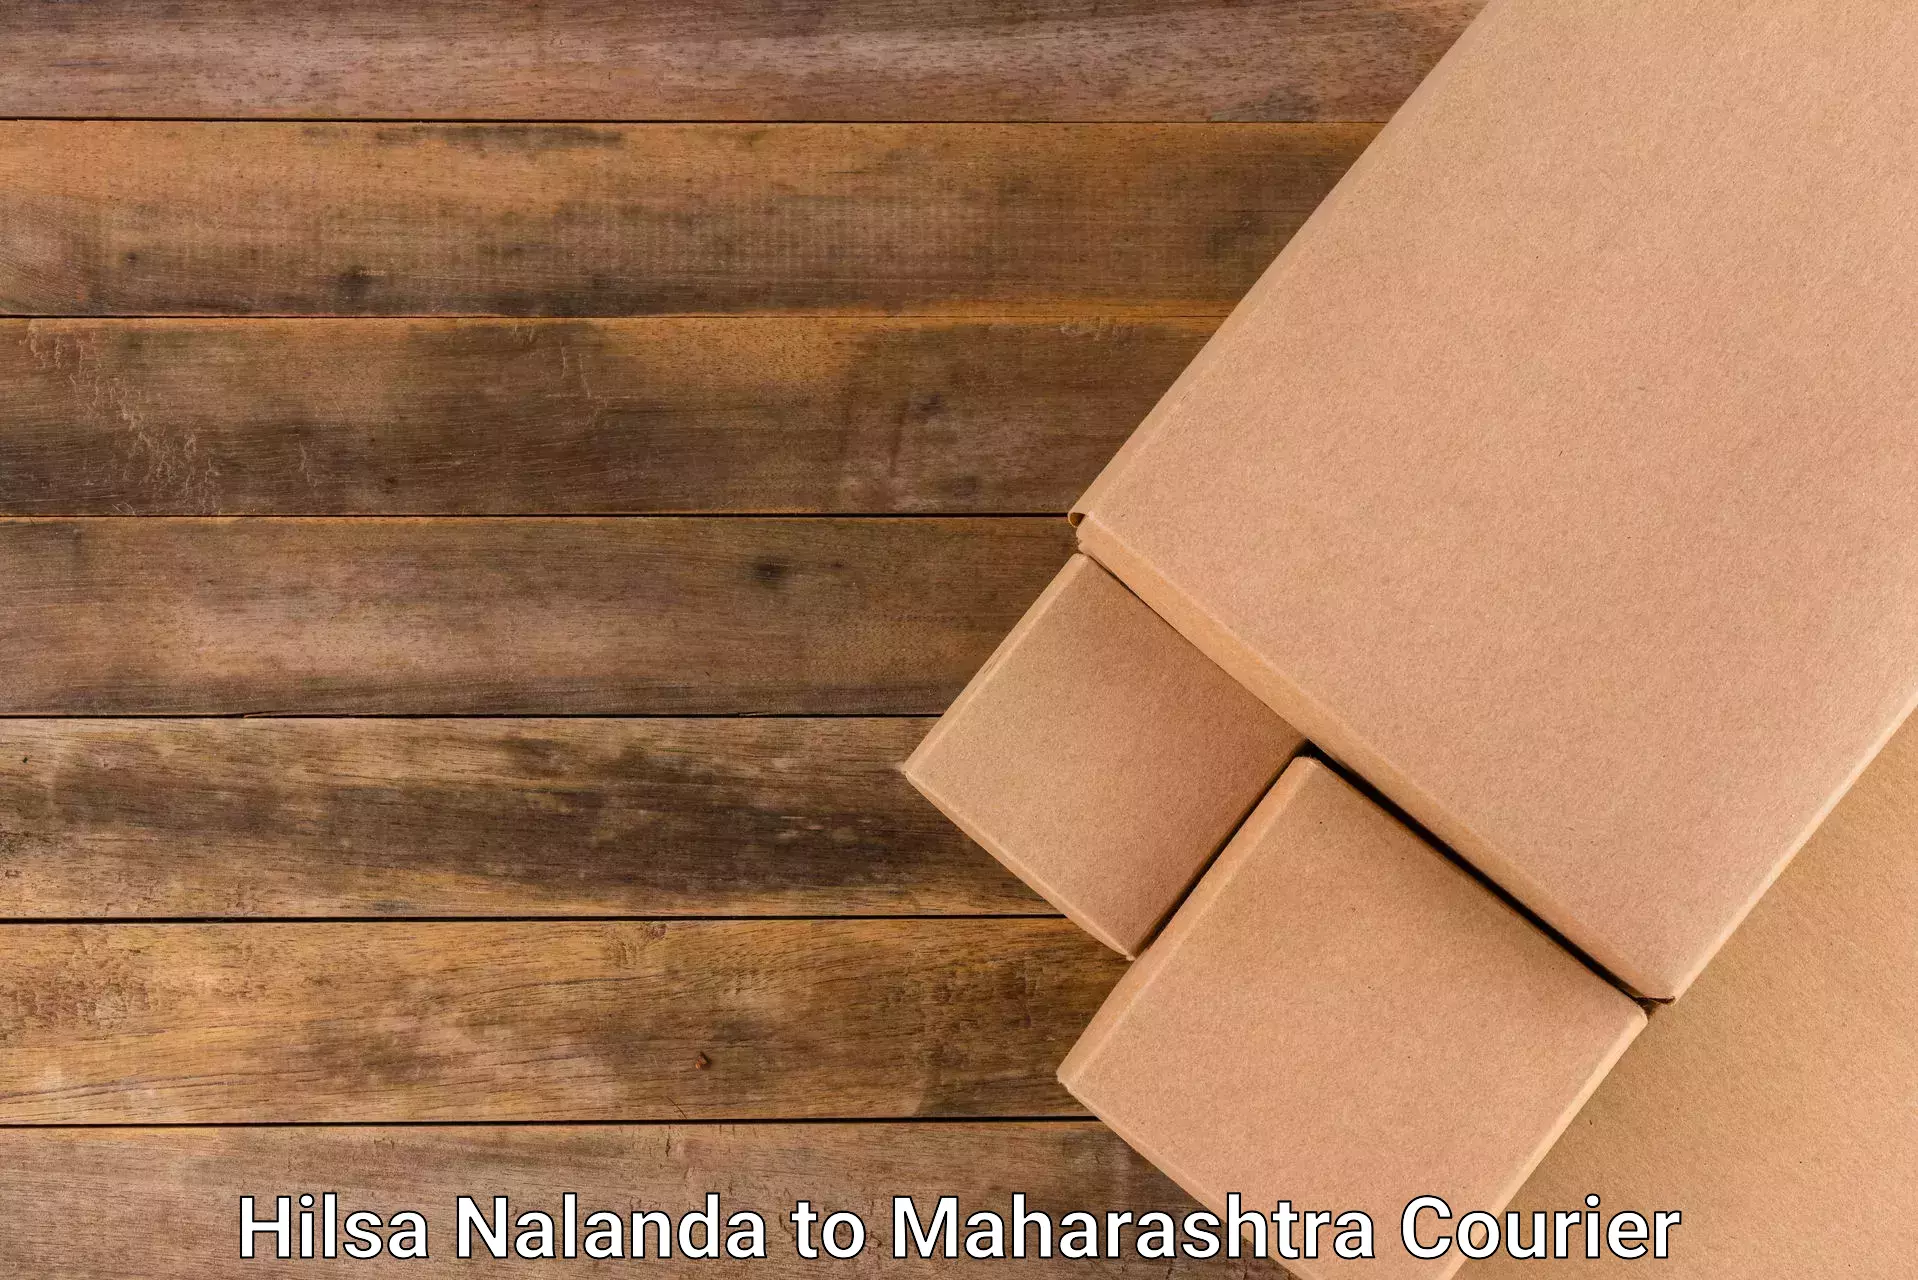 Multi-service courier options Hilsa Nalanda to Solapur